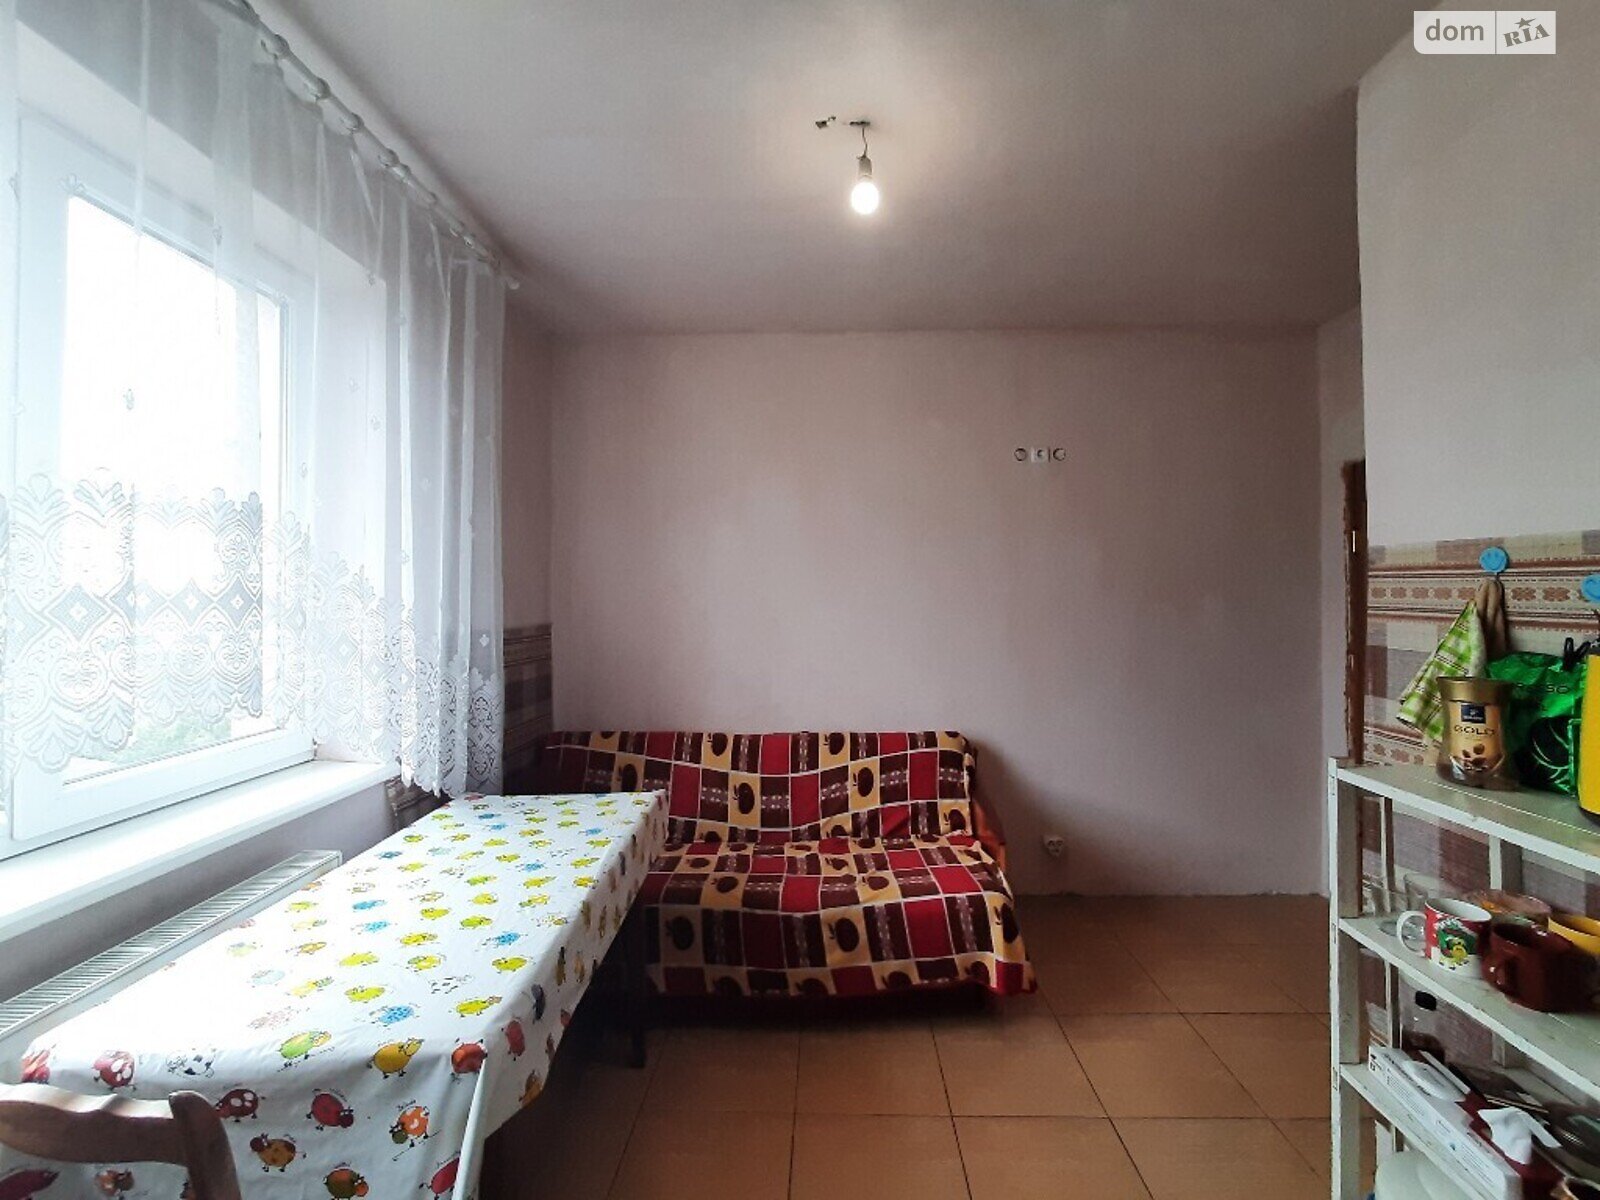 Продажа пятикомнатной квартиры в Ивано-Франковске, на ул. Радищева, район Вокзал фото 1